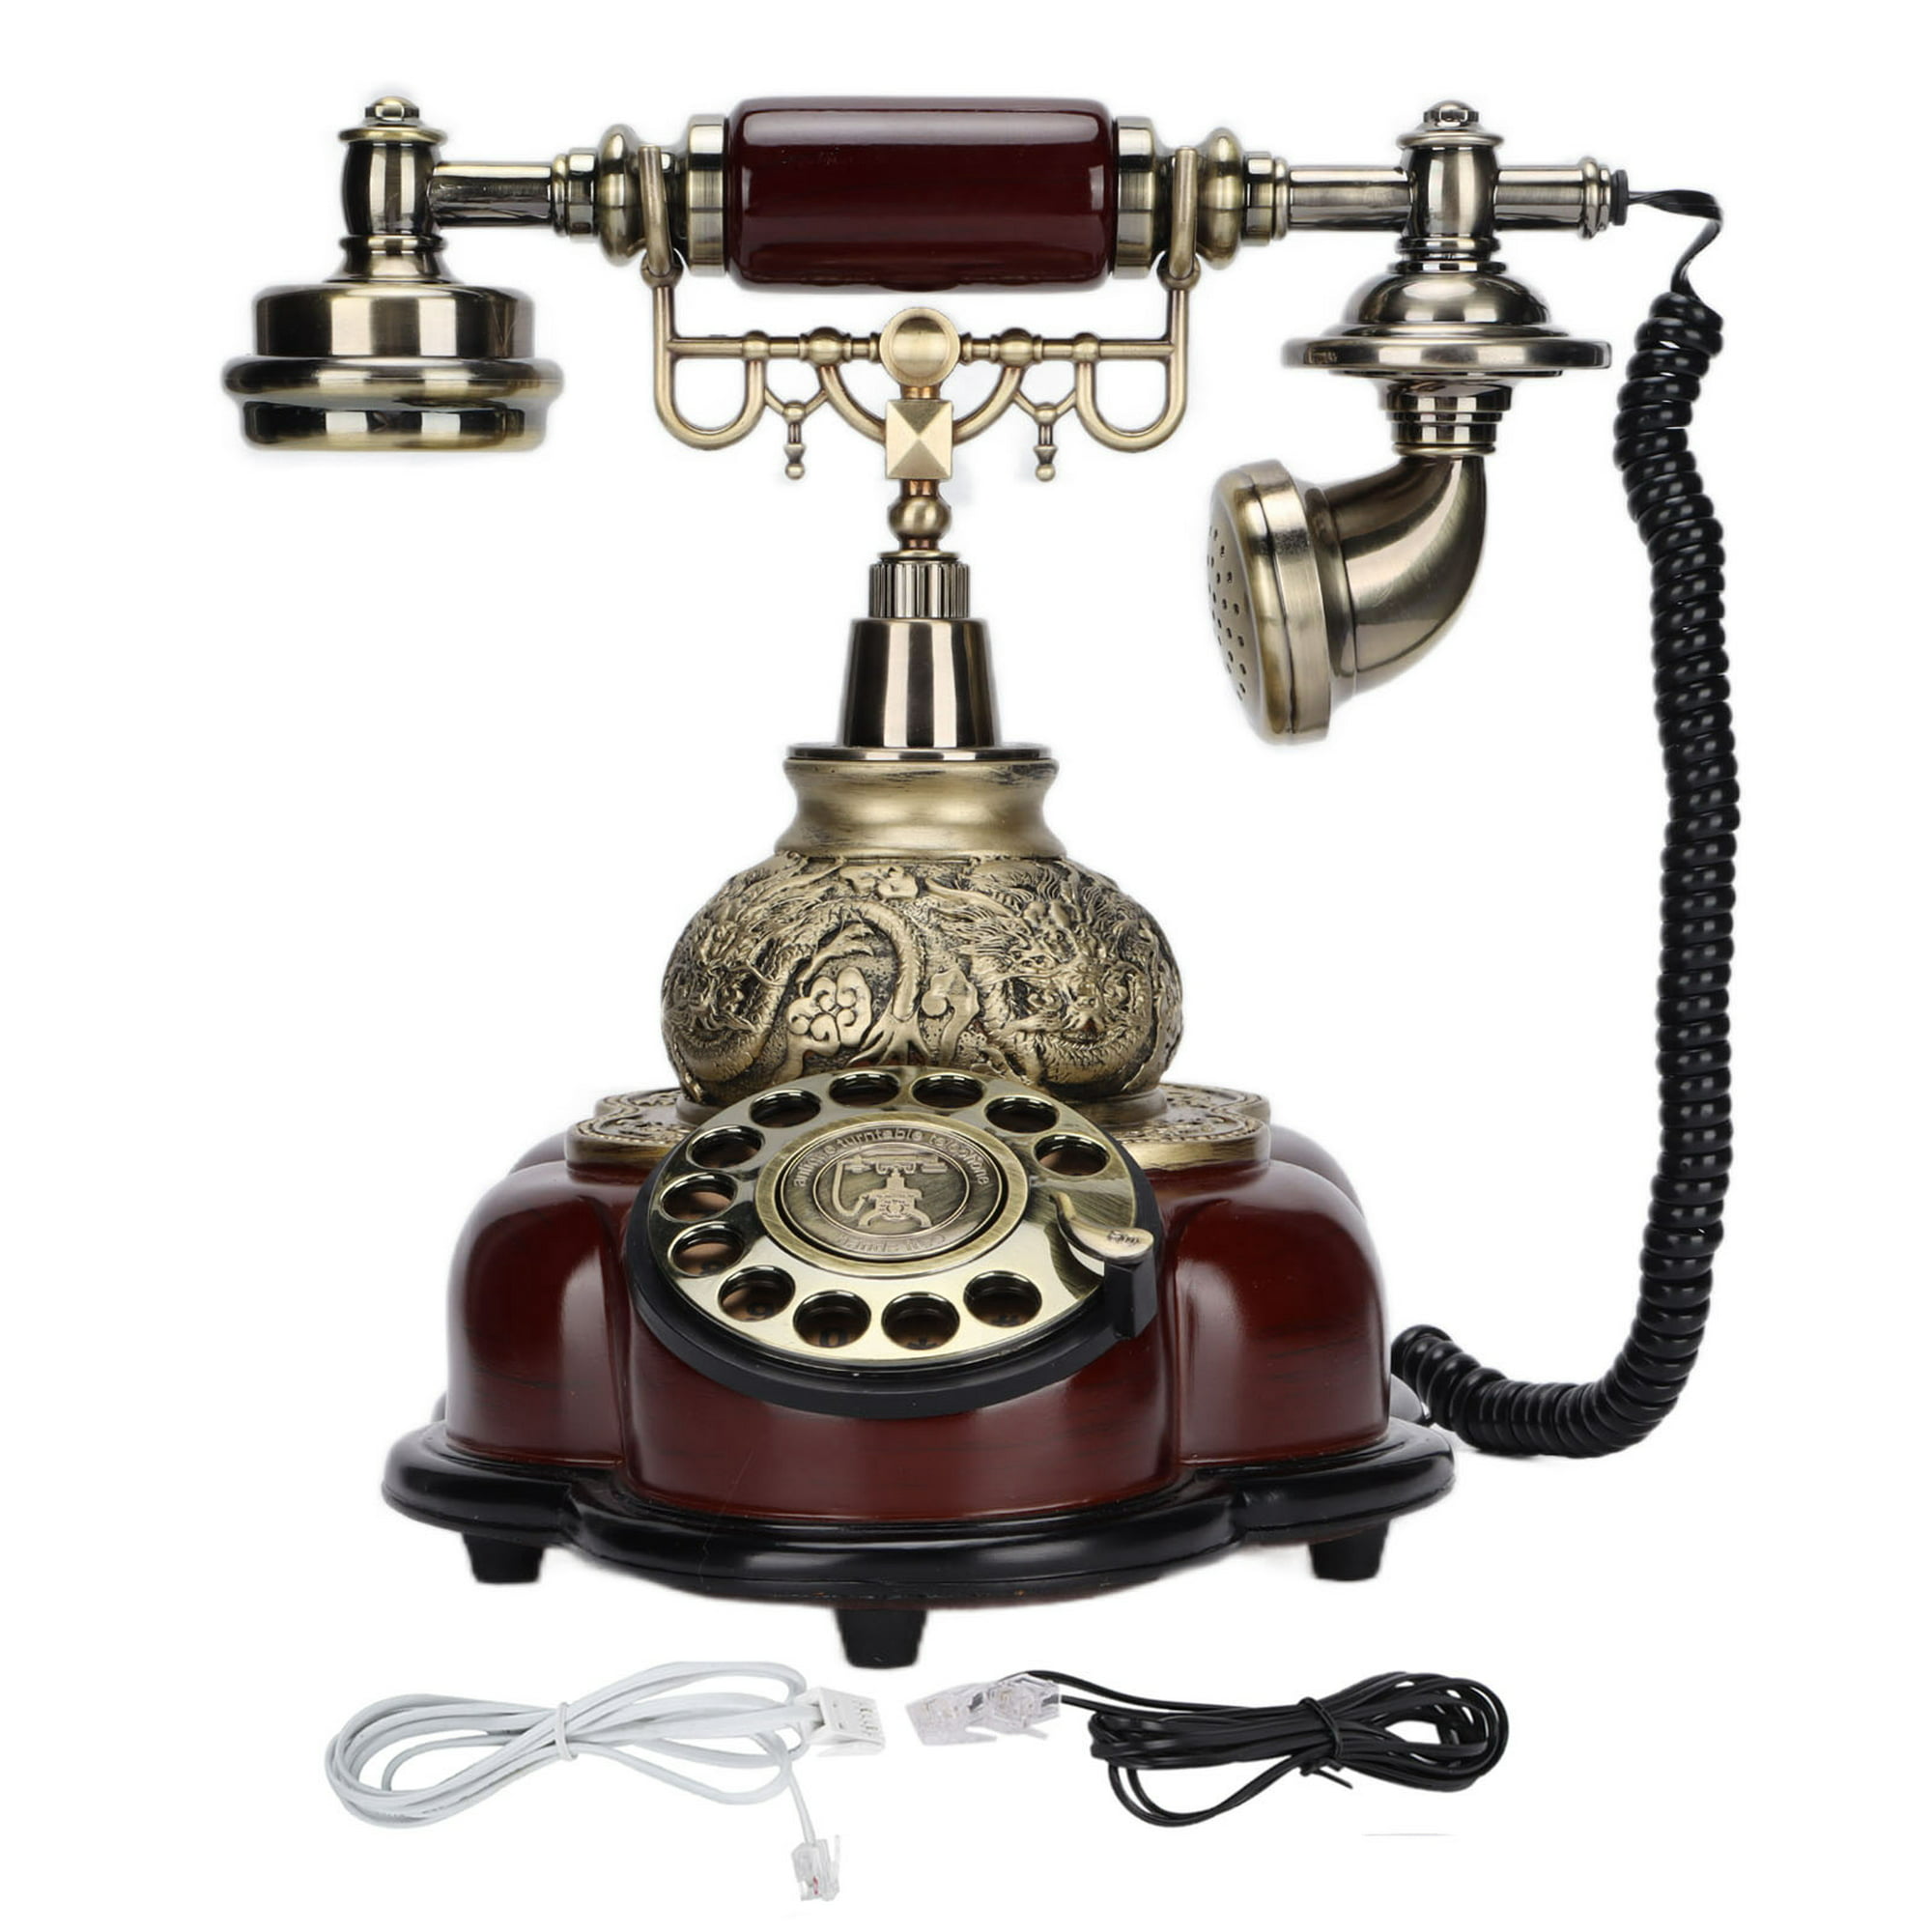  Teléfonos decorativos antiguos de bronce Teléfonos antiguos/ Teléfono retro Teléfono de oficina en casa : Productos de Oficina